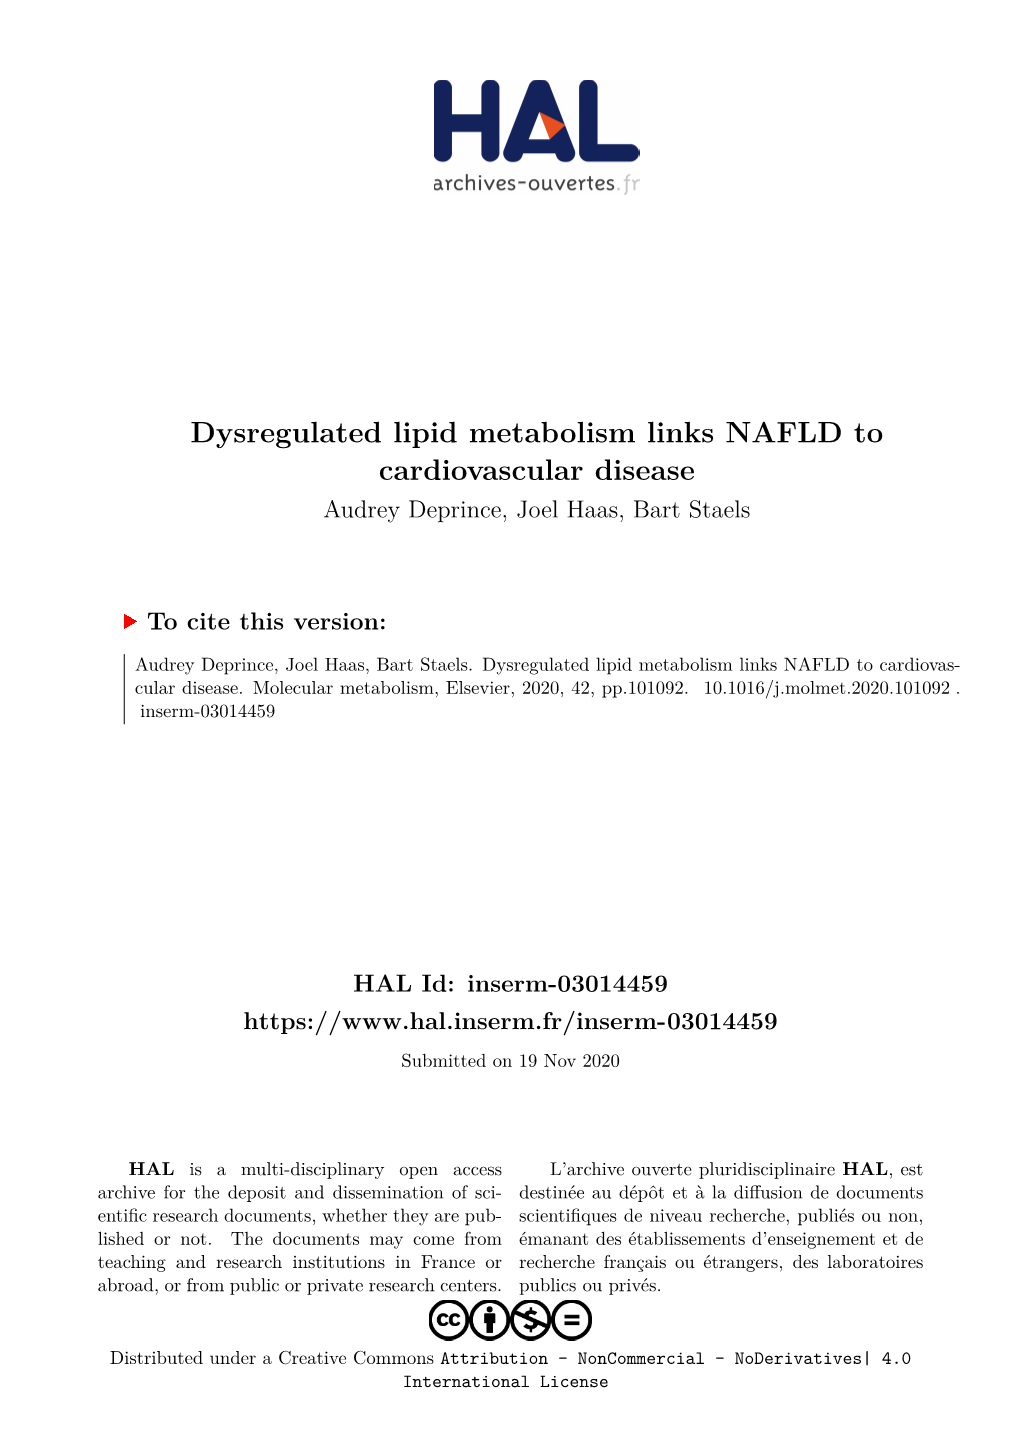 Dysregulated Lipid Metabolism Links NAFLD to Cardiovascular Disease Audrey Deprince, Joel Haas, Bart Staels